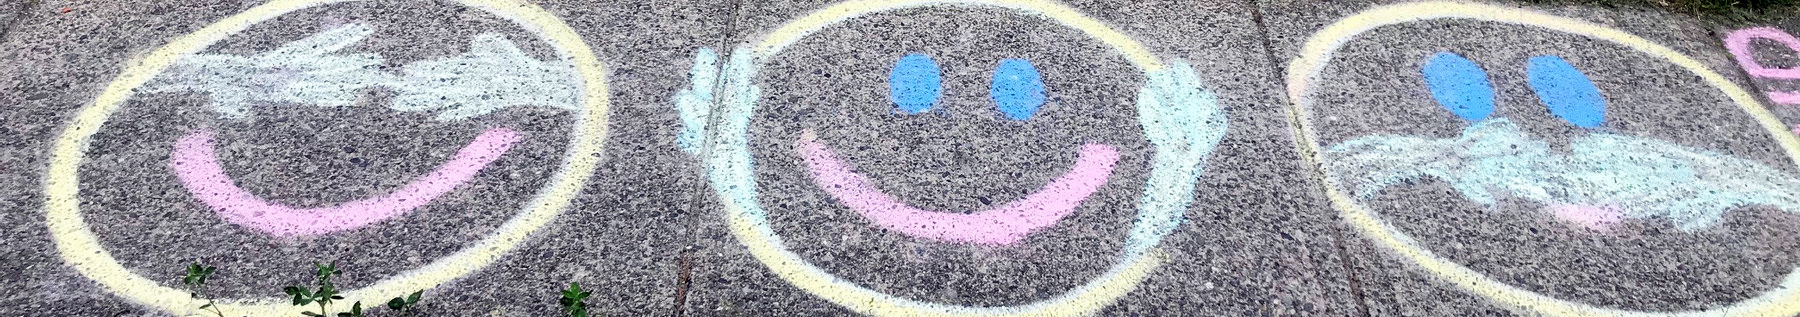 chalk art on sidewalk